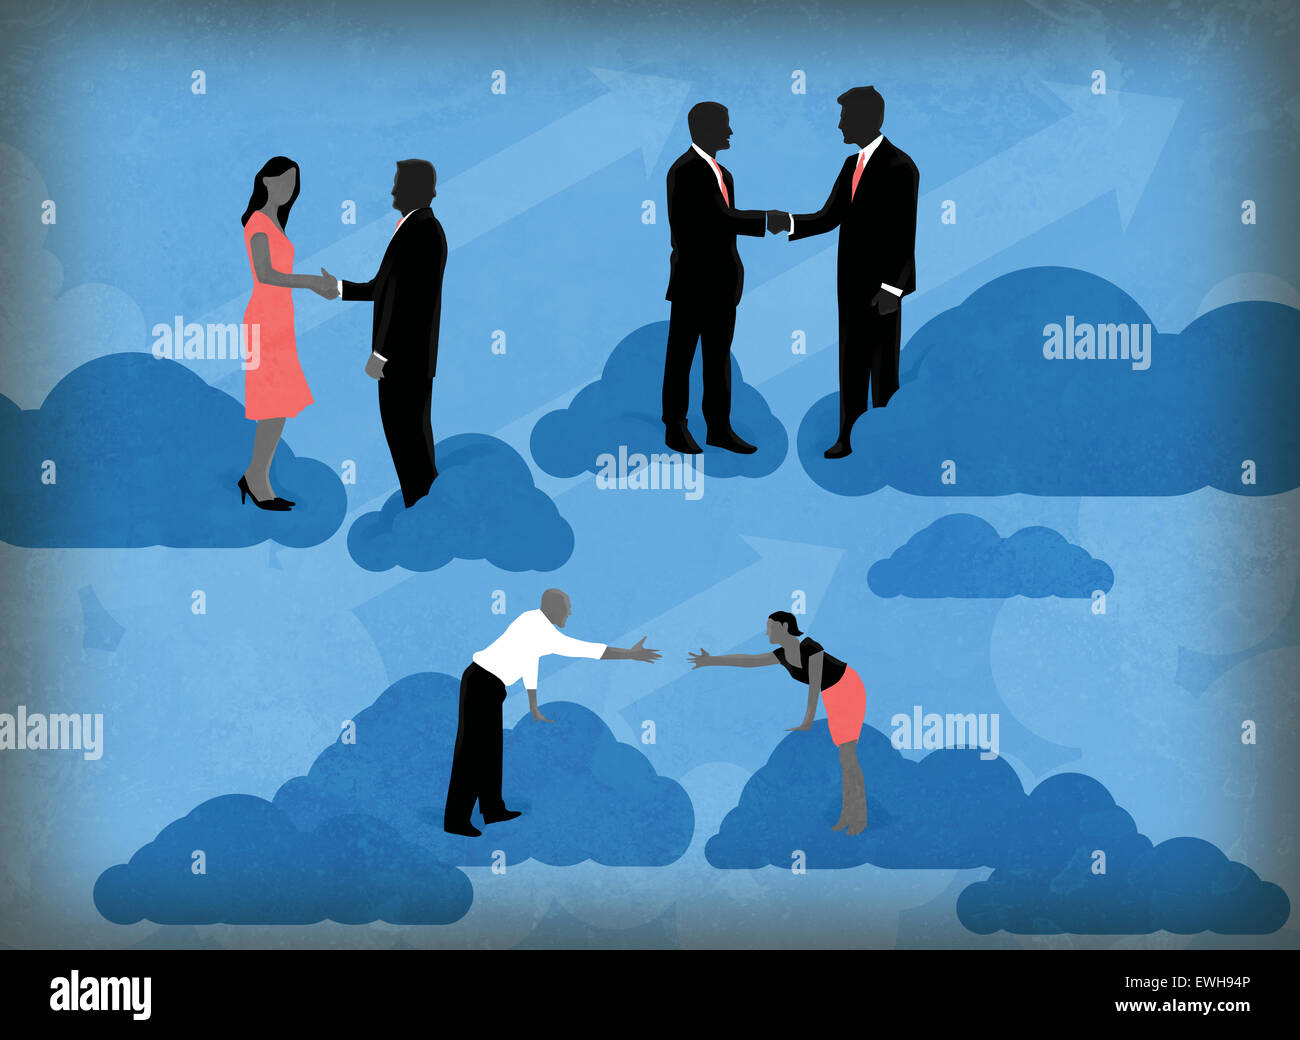 Illustrative image of business people making global partners Stock Photo